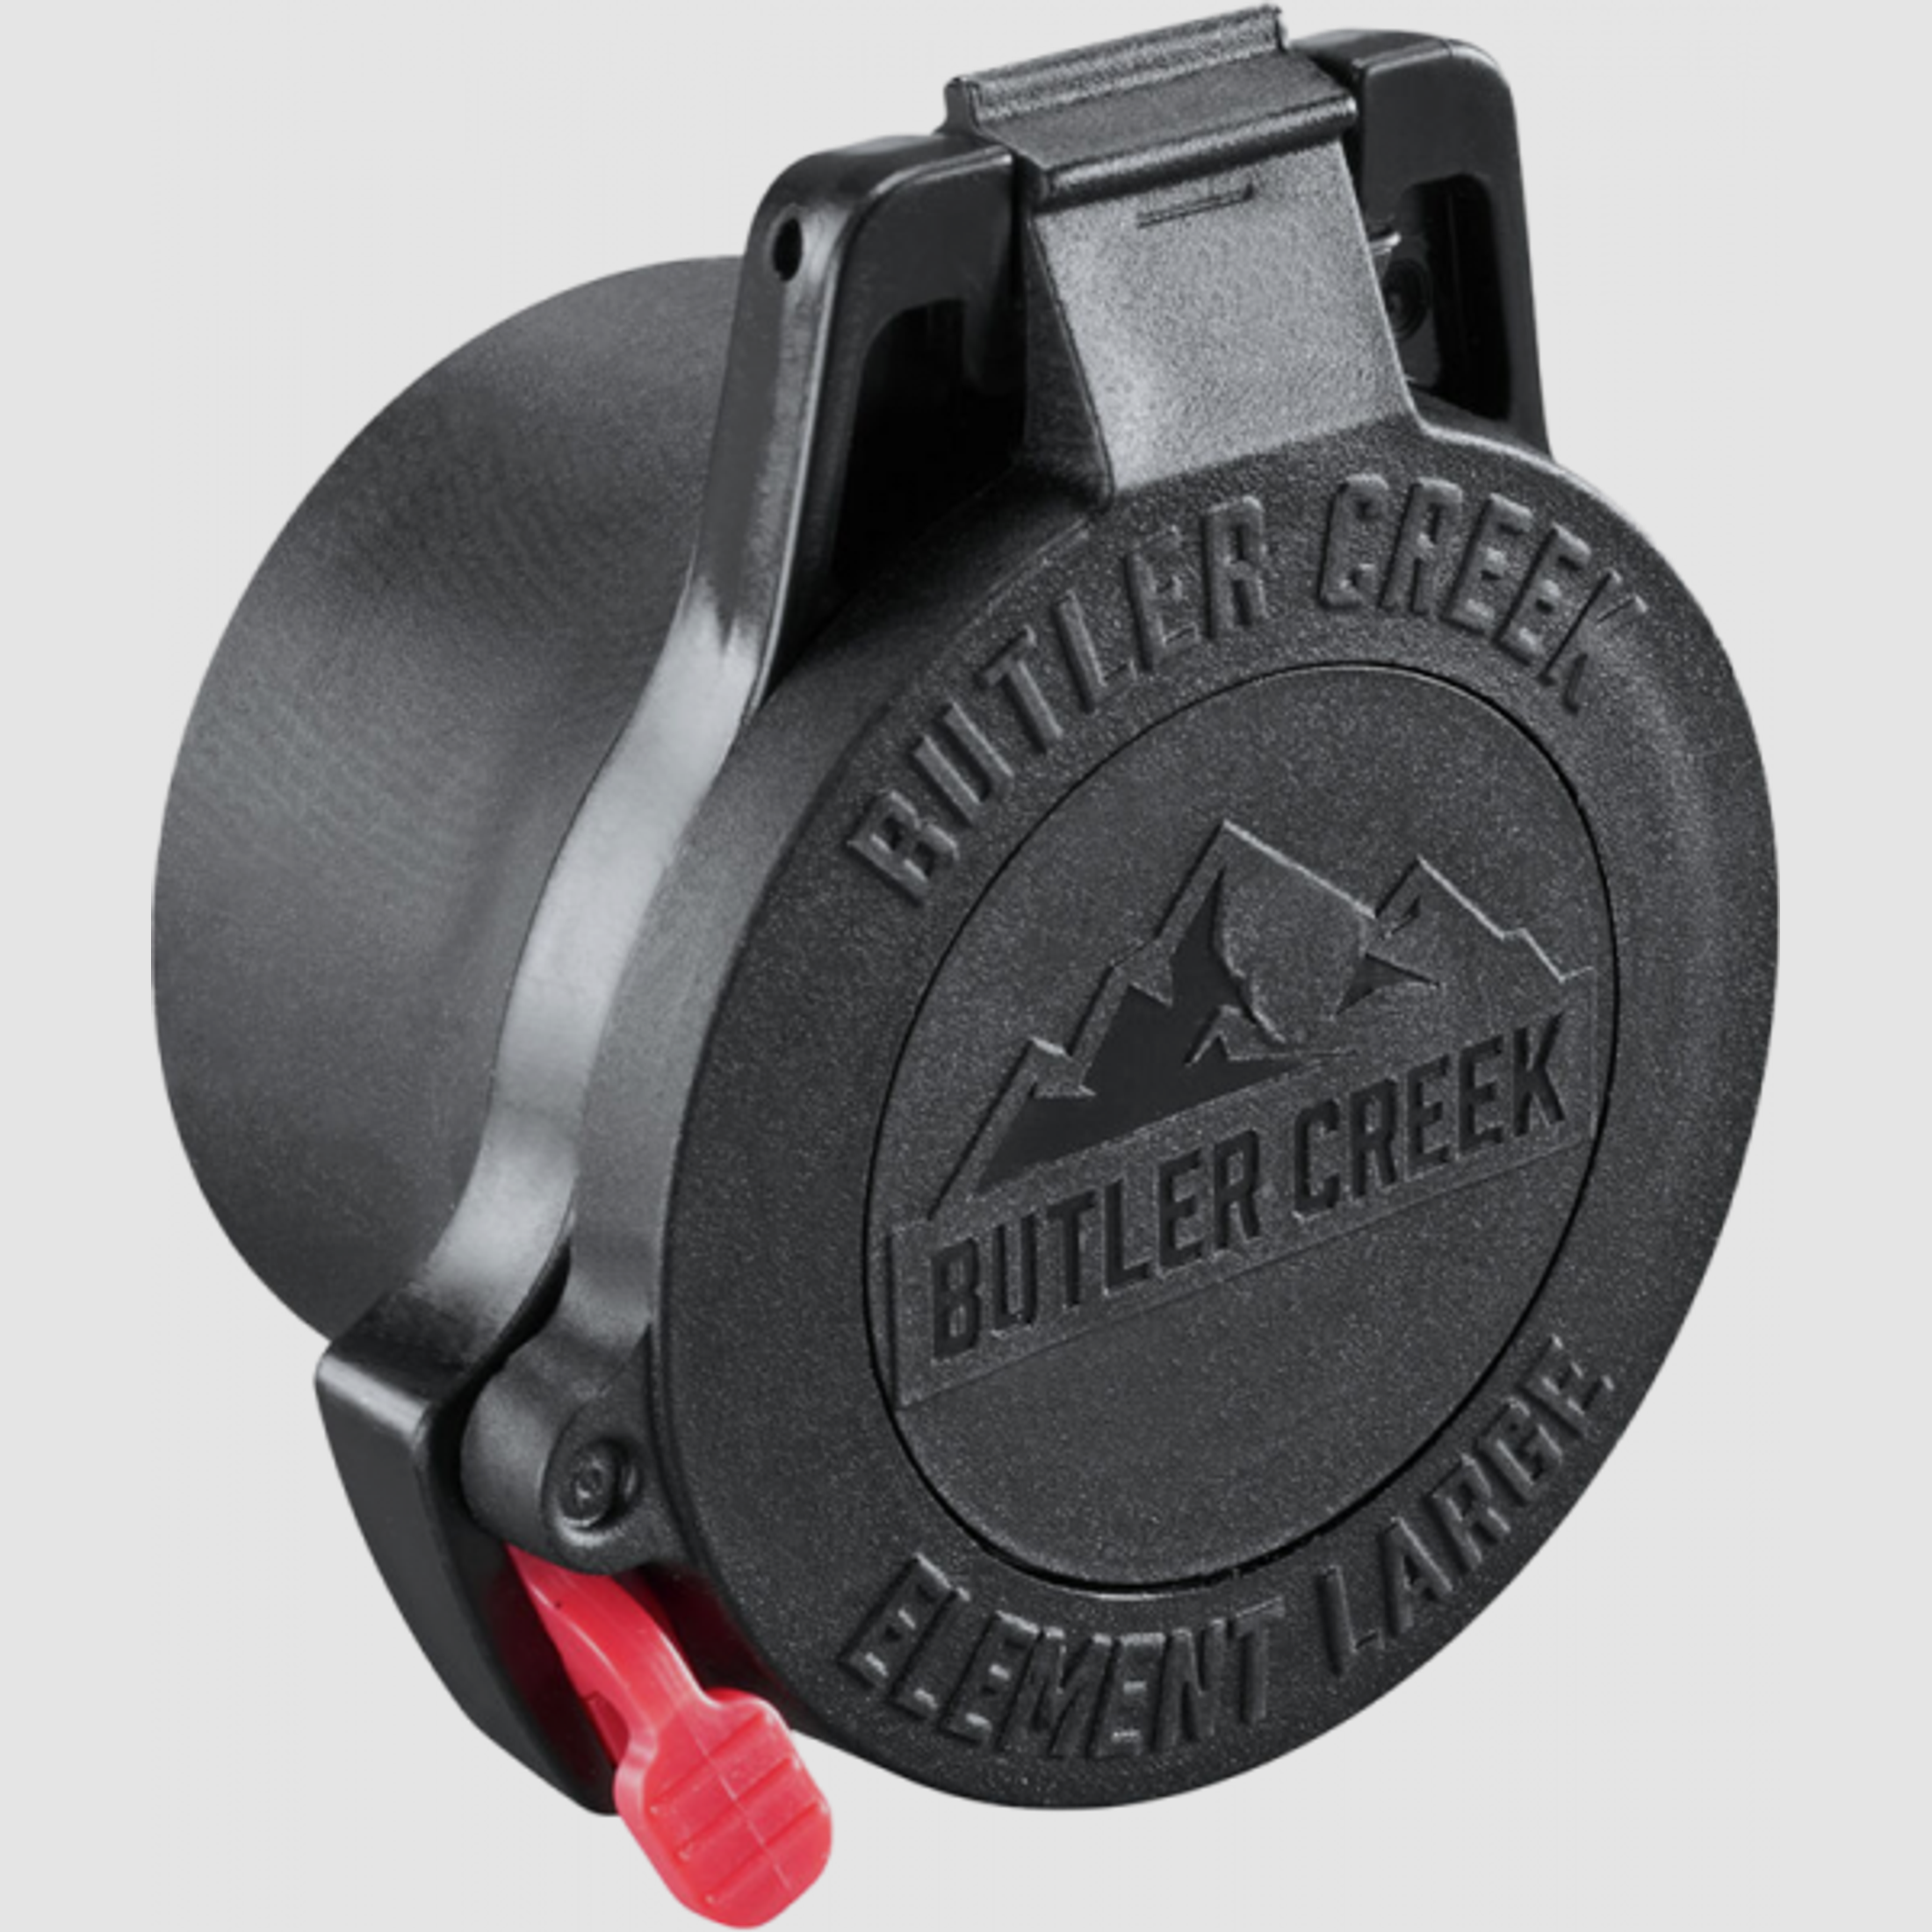 Butler Creek Element Okularschutzkappe